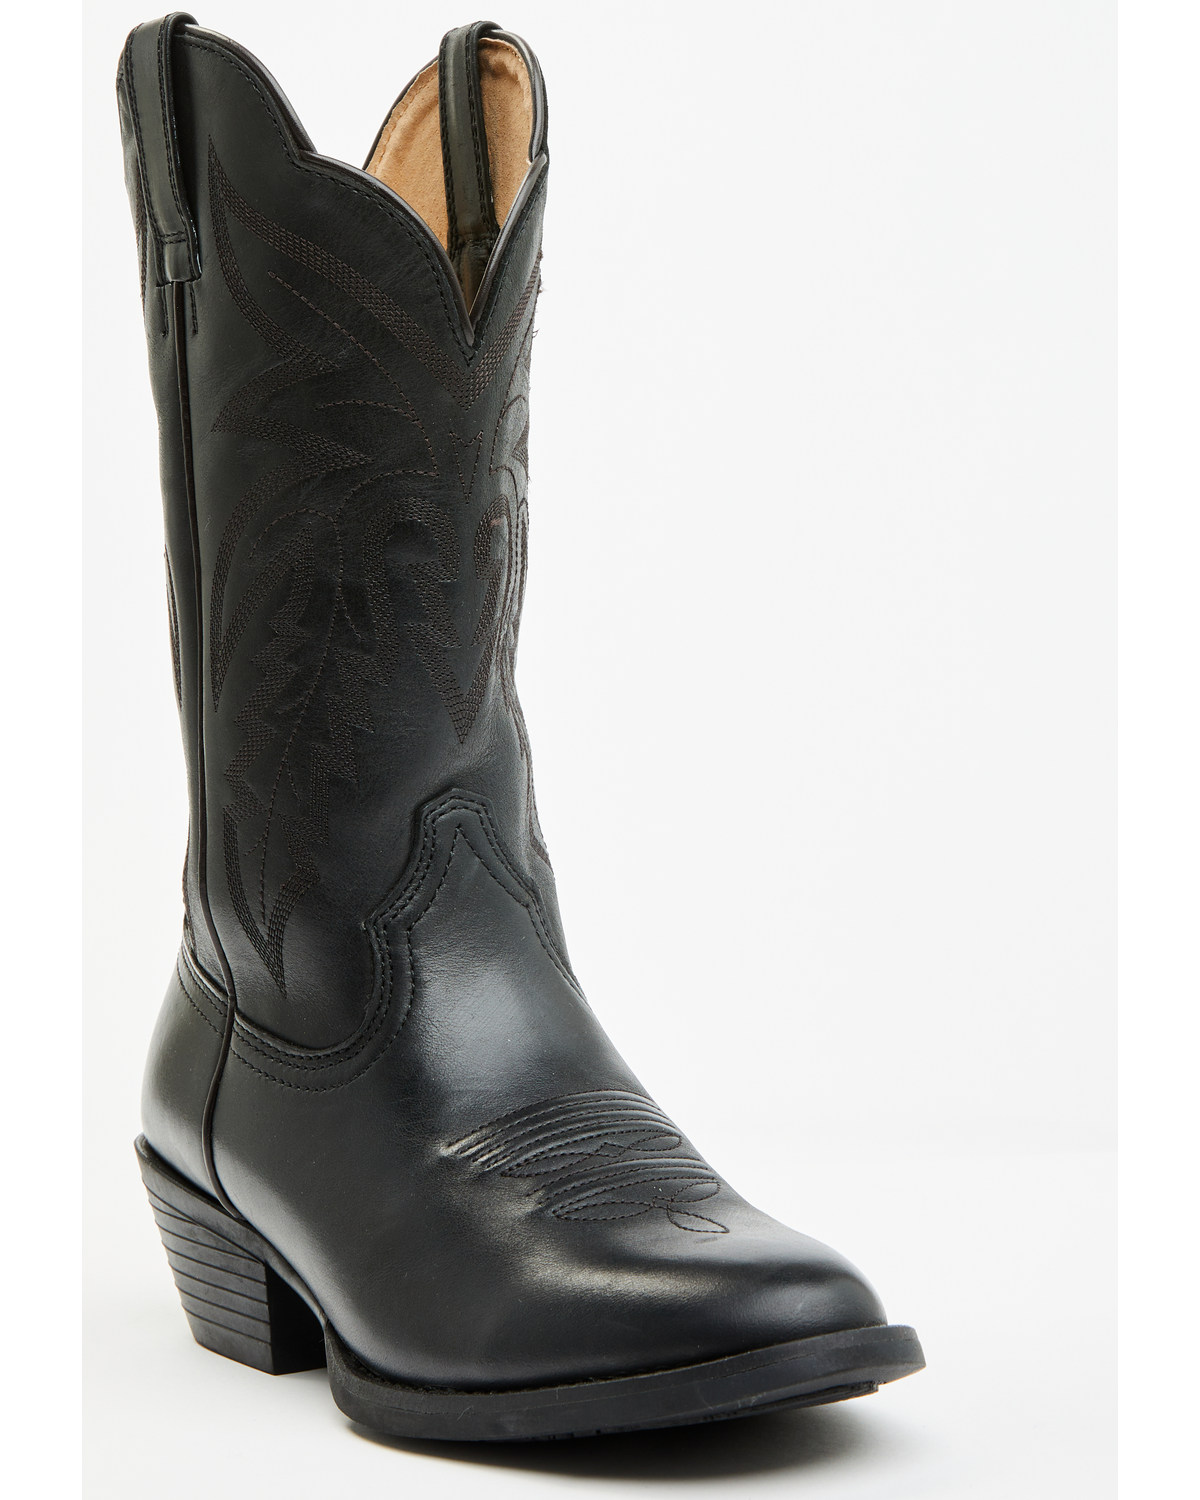 Shyanne Women's Rival Performance Western Boots - Medium Toe